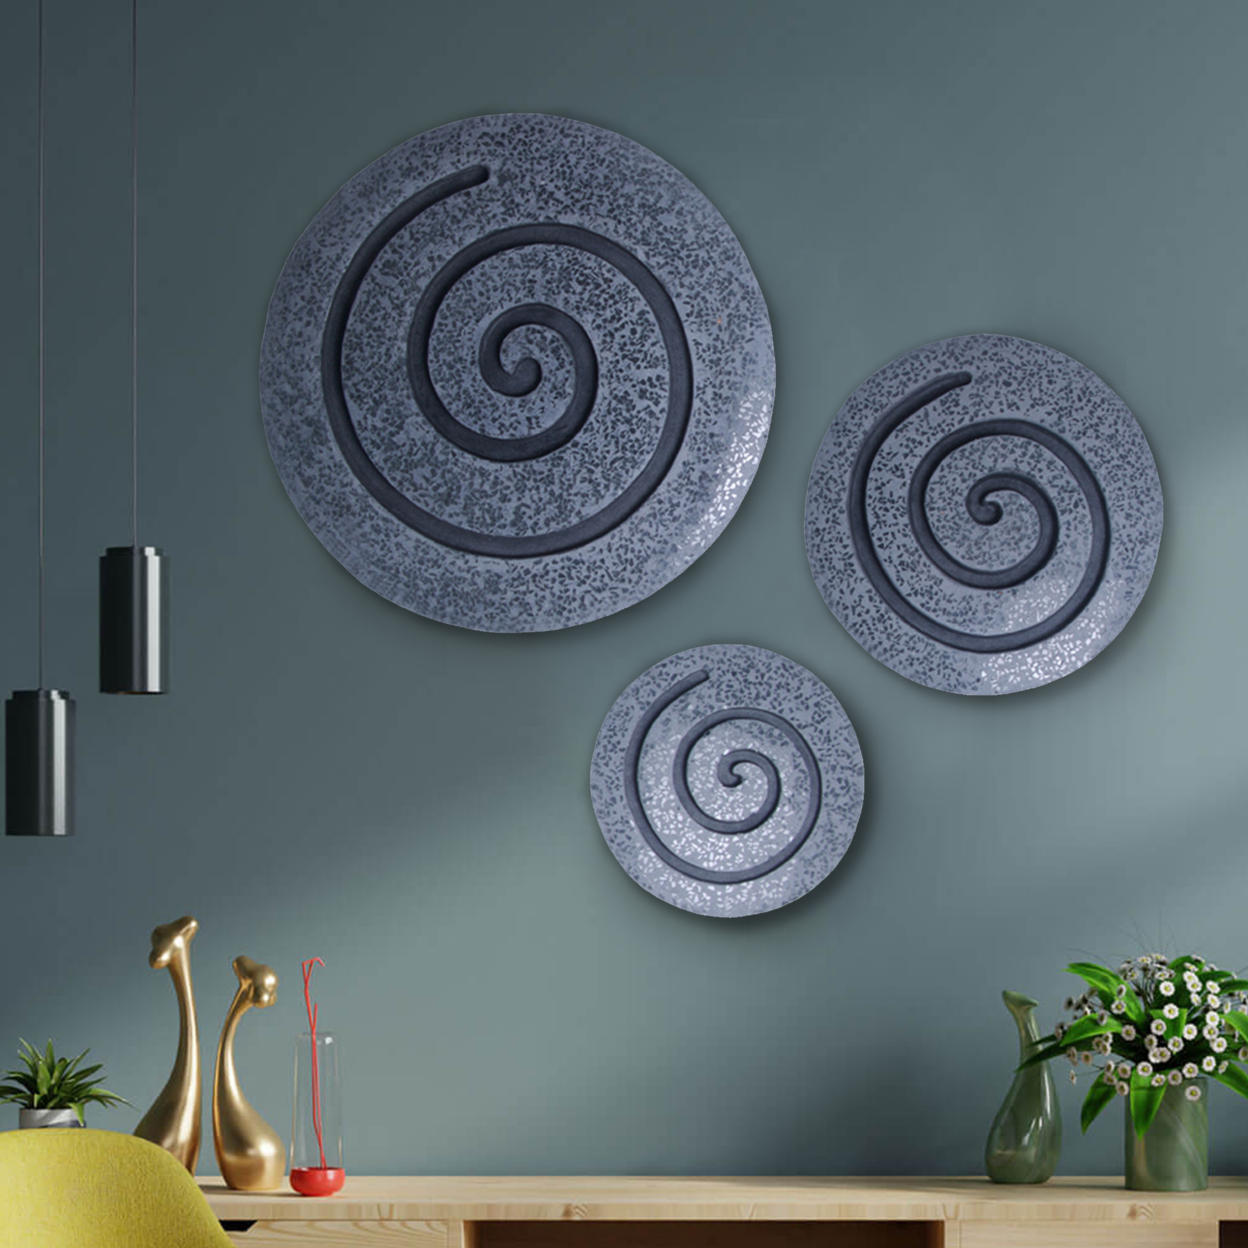 Round Sandstone And Glass Wall Decor With Spiral Design, Small, Gray- Saltoro Sherpi